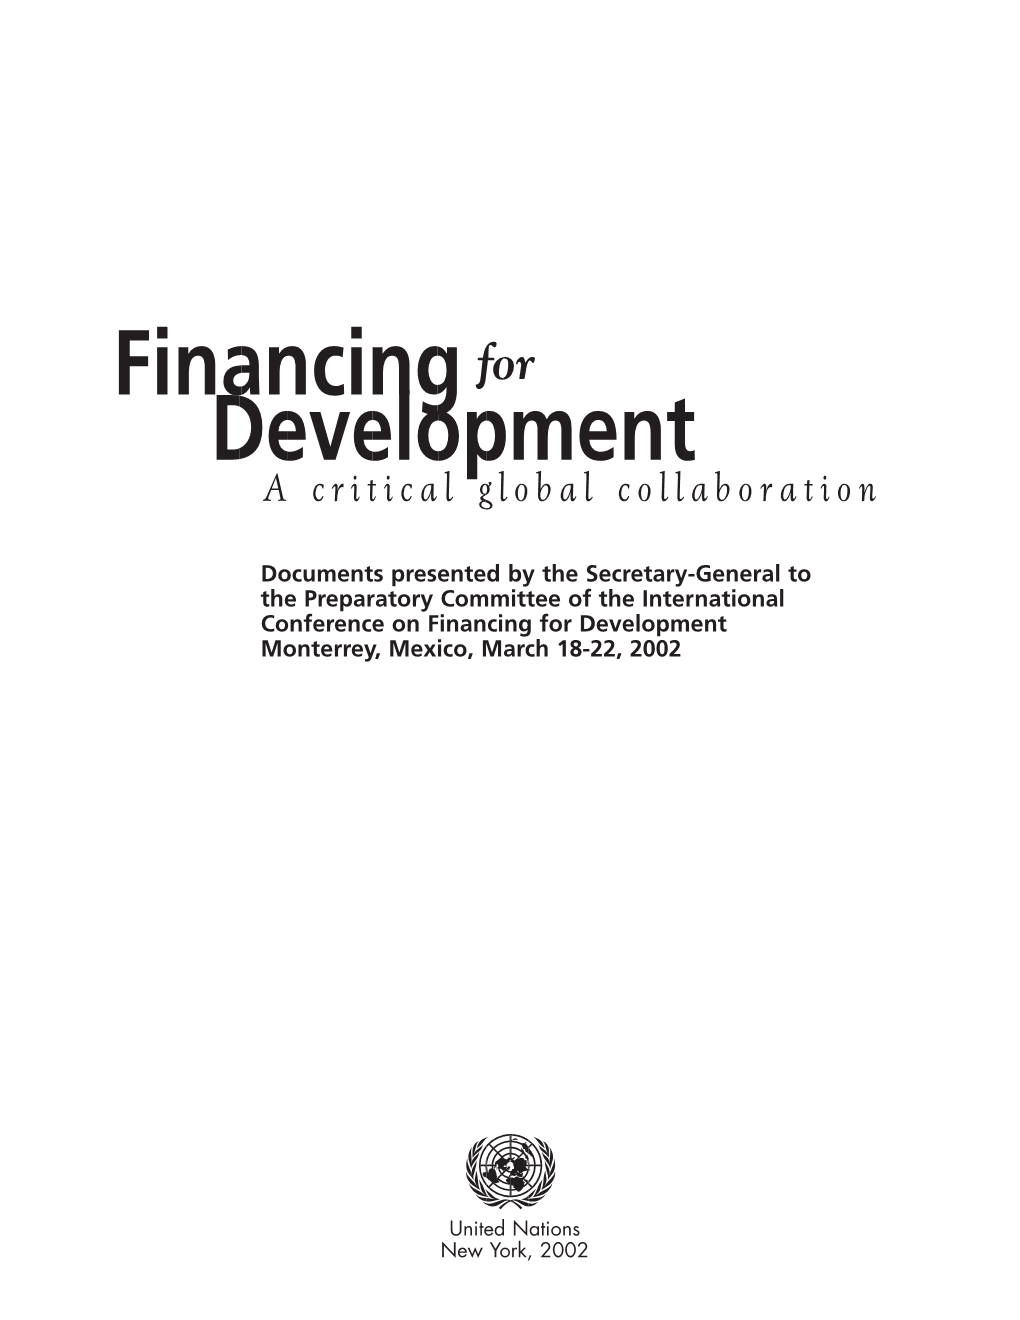 Financing for Development Monterrey, Mexico, March 18-22, 2002